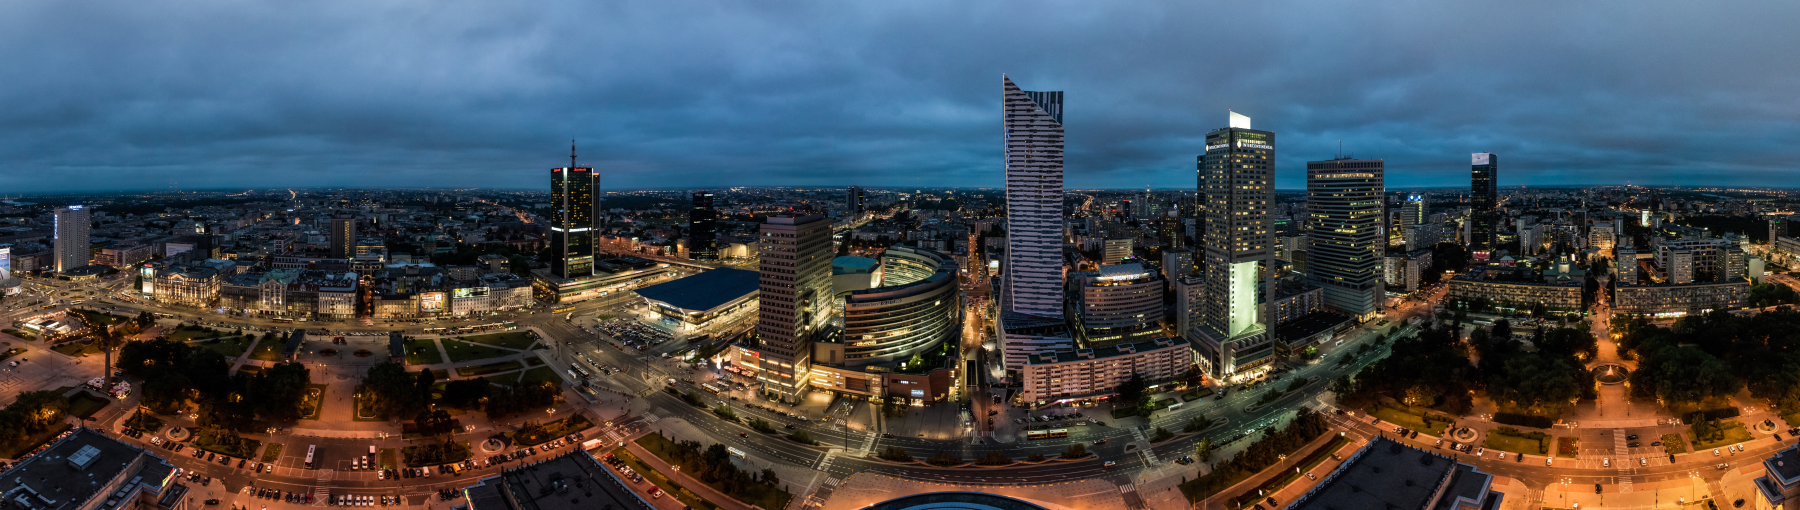 Panorama _fot. Filip Kwiatkowski (2)